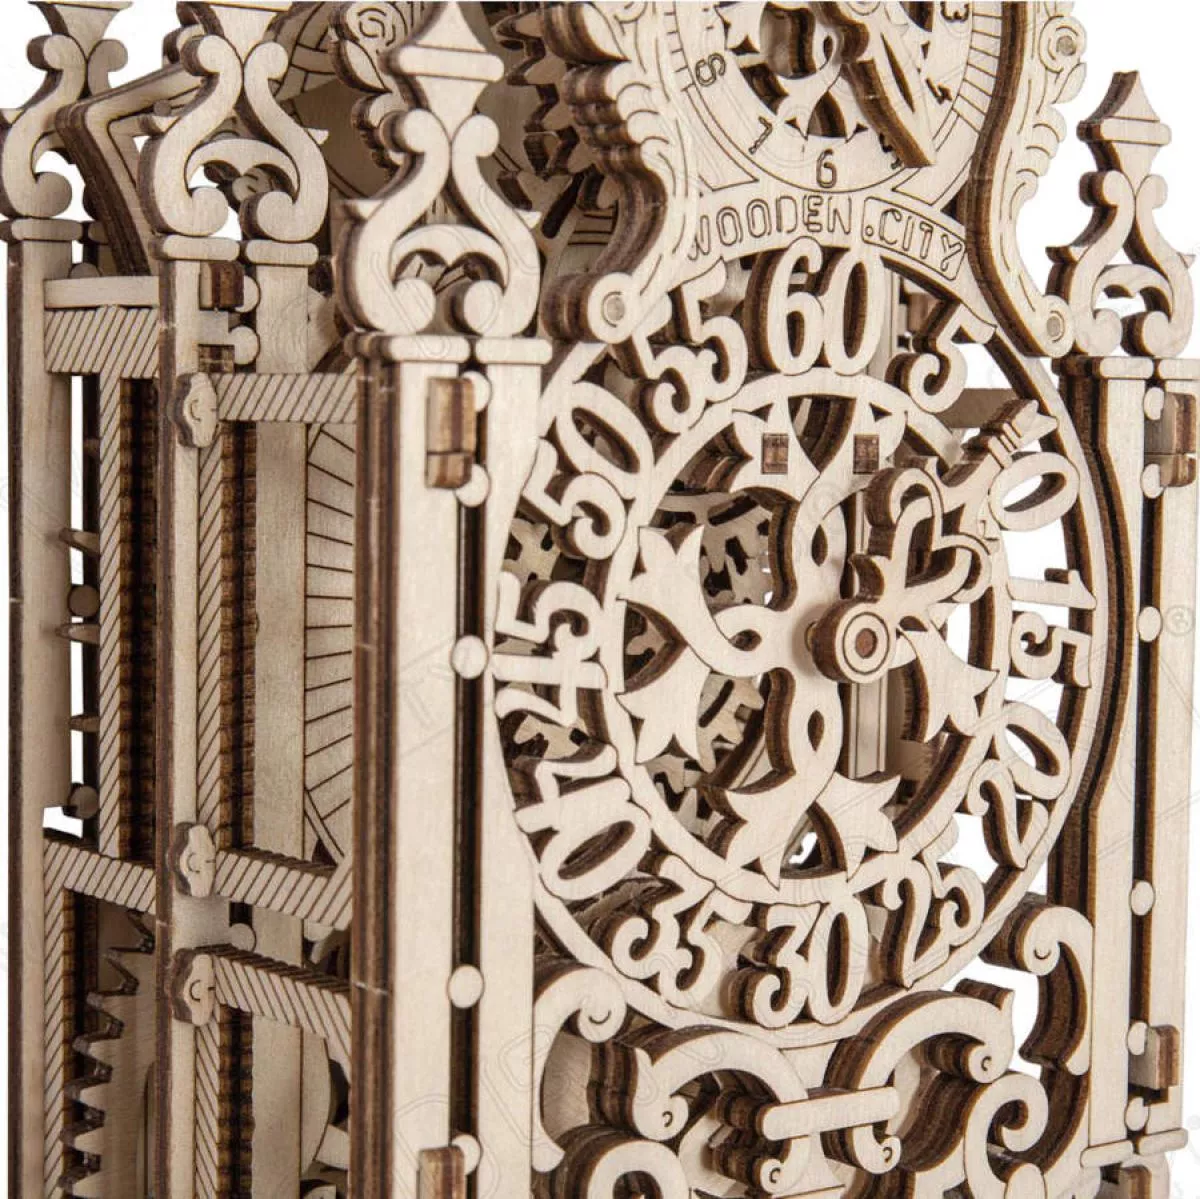 Pendulum Wall Clock – Large Wooden Kit with Clockwork